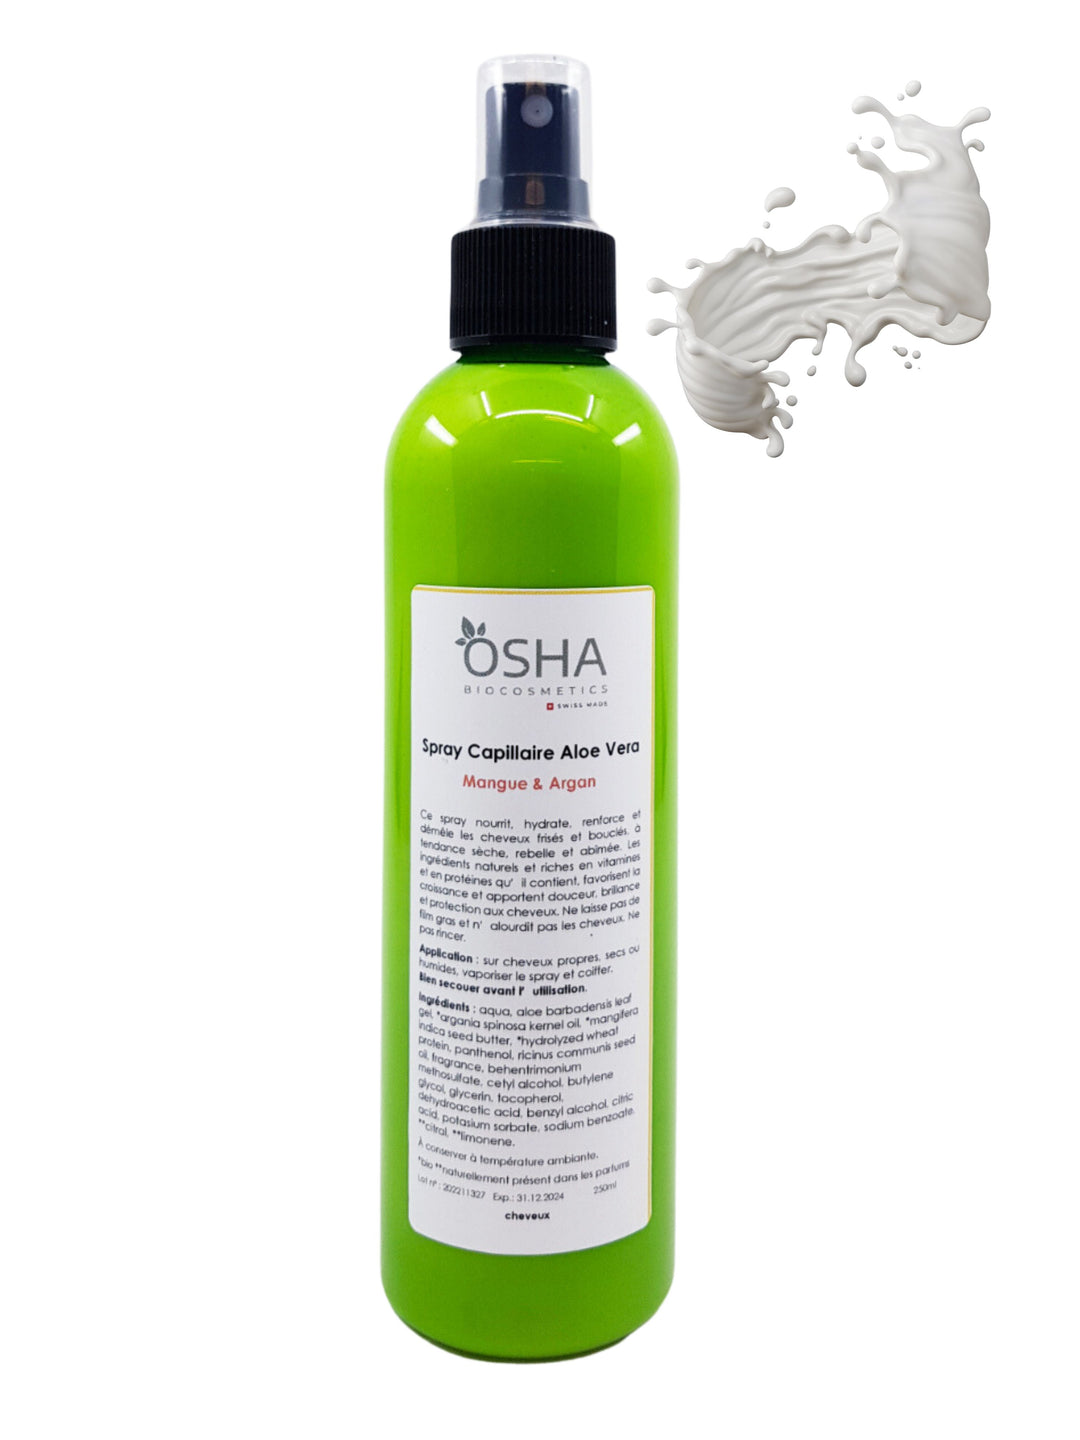 Spray Capillaire Aloe Vera Mangue & Argan - OSHA Biocosmetics